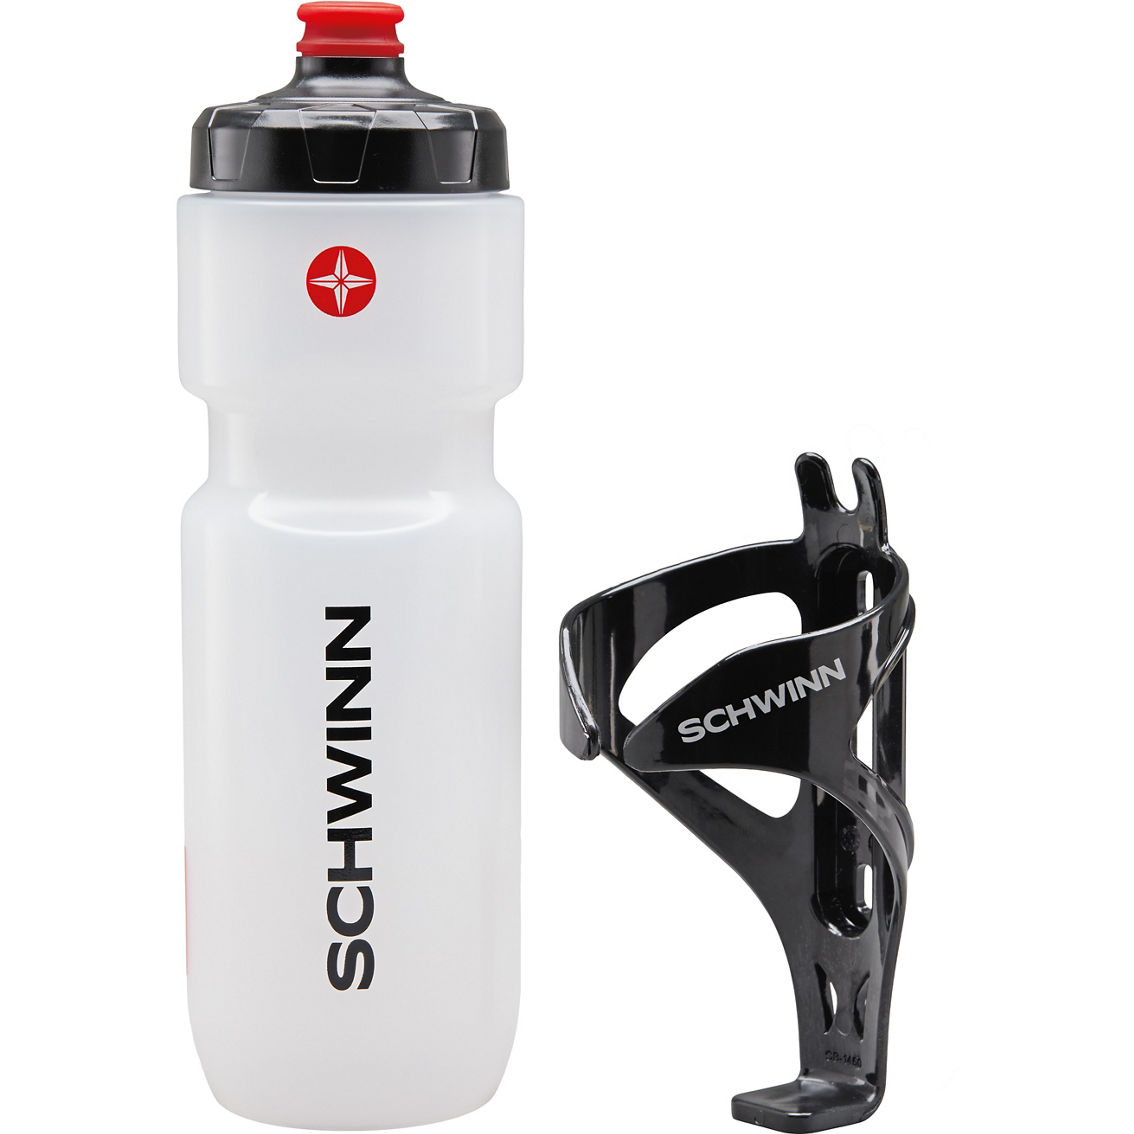 Schwinn Sport 26 oz. Water Bottle with Cage - Image 2 of 6